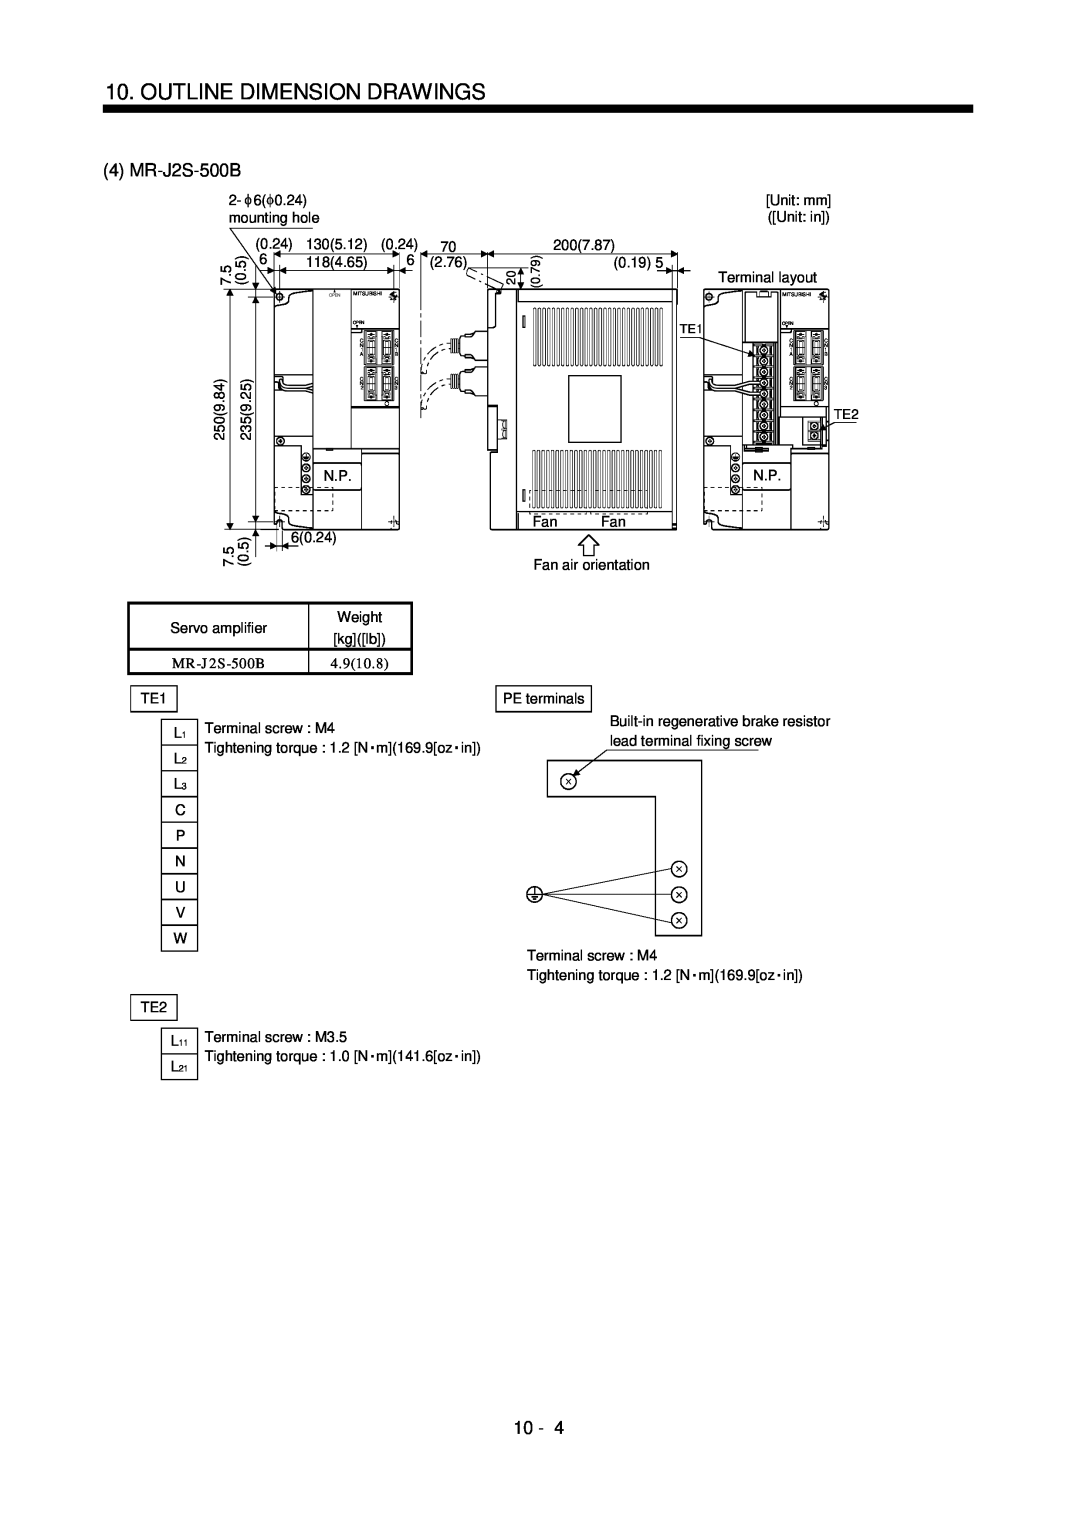 Bose MR-J2S- B instruction manual MR-J2S-500B, Outline Dimension Drawings, 10 